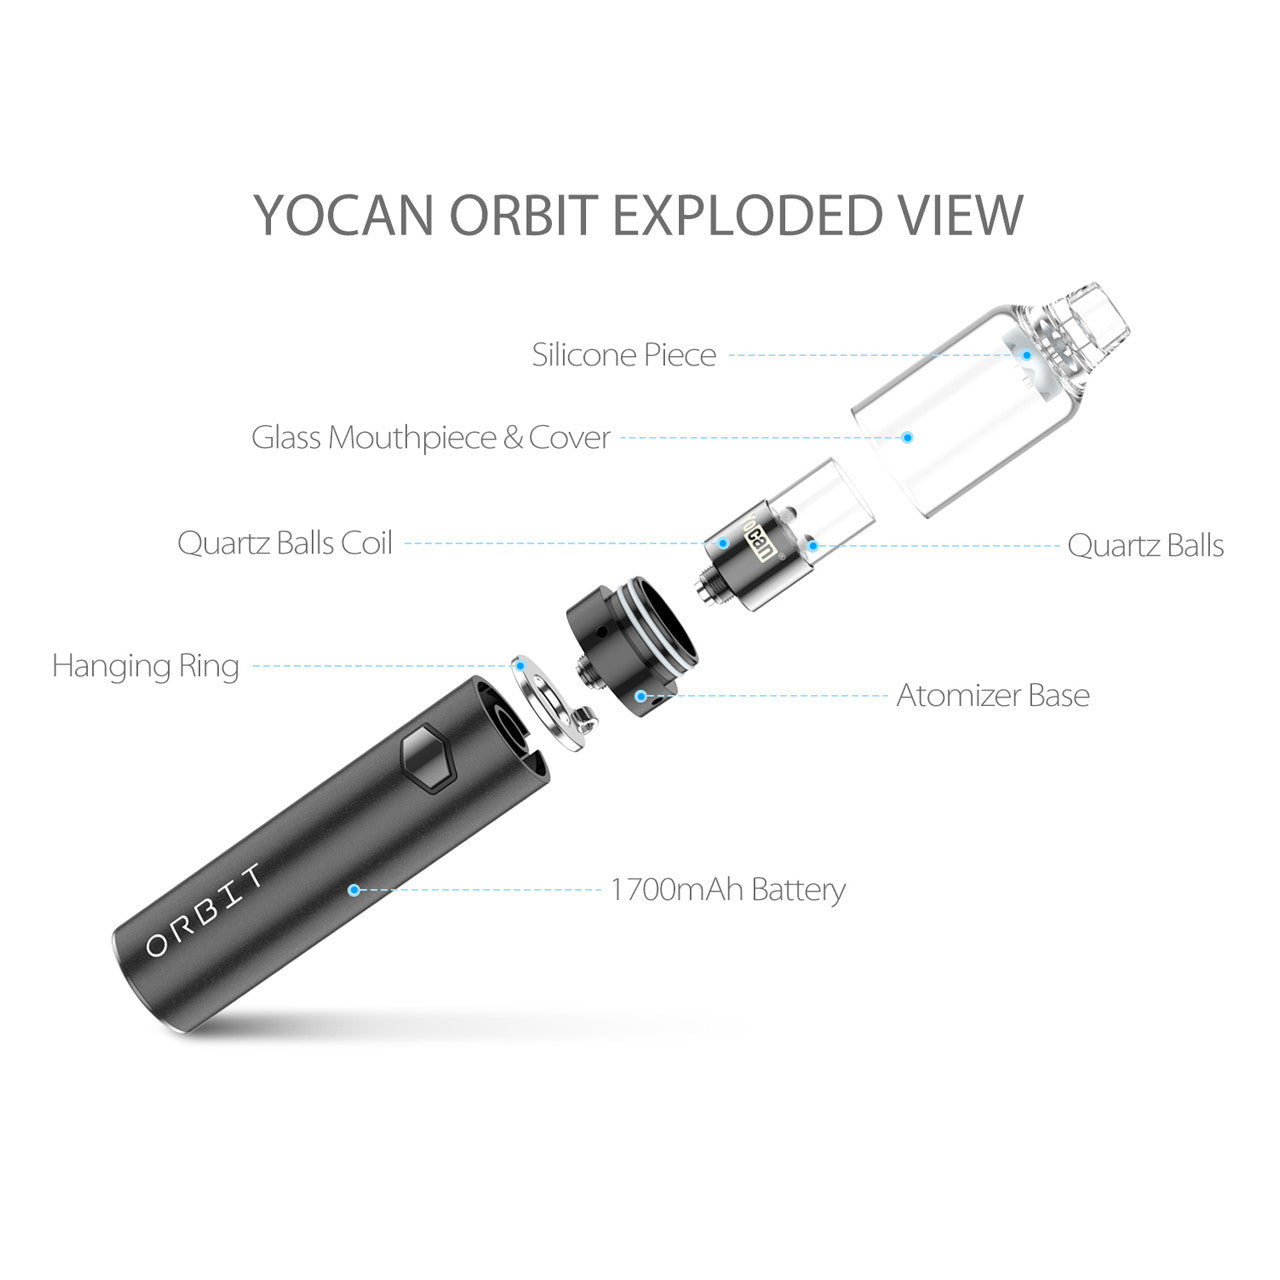 Yocan Orbit 1700mAh Vaporizer Kit - Online Vape Shop | Alternative pods | Affordable Vapor Store | Vape Disposables